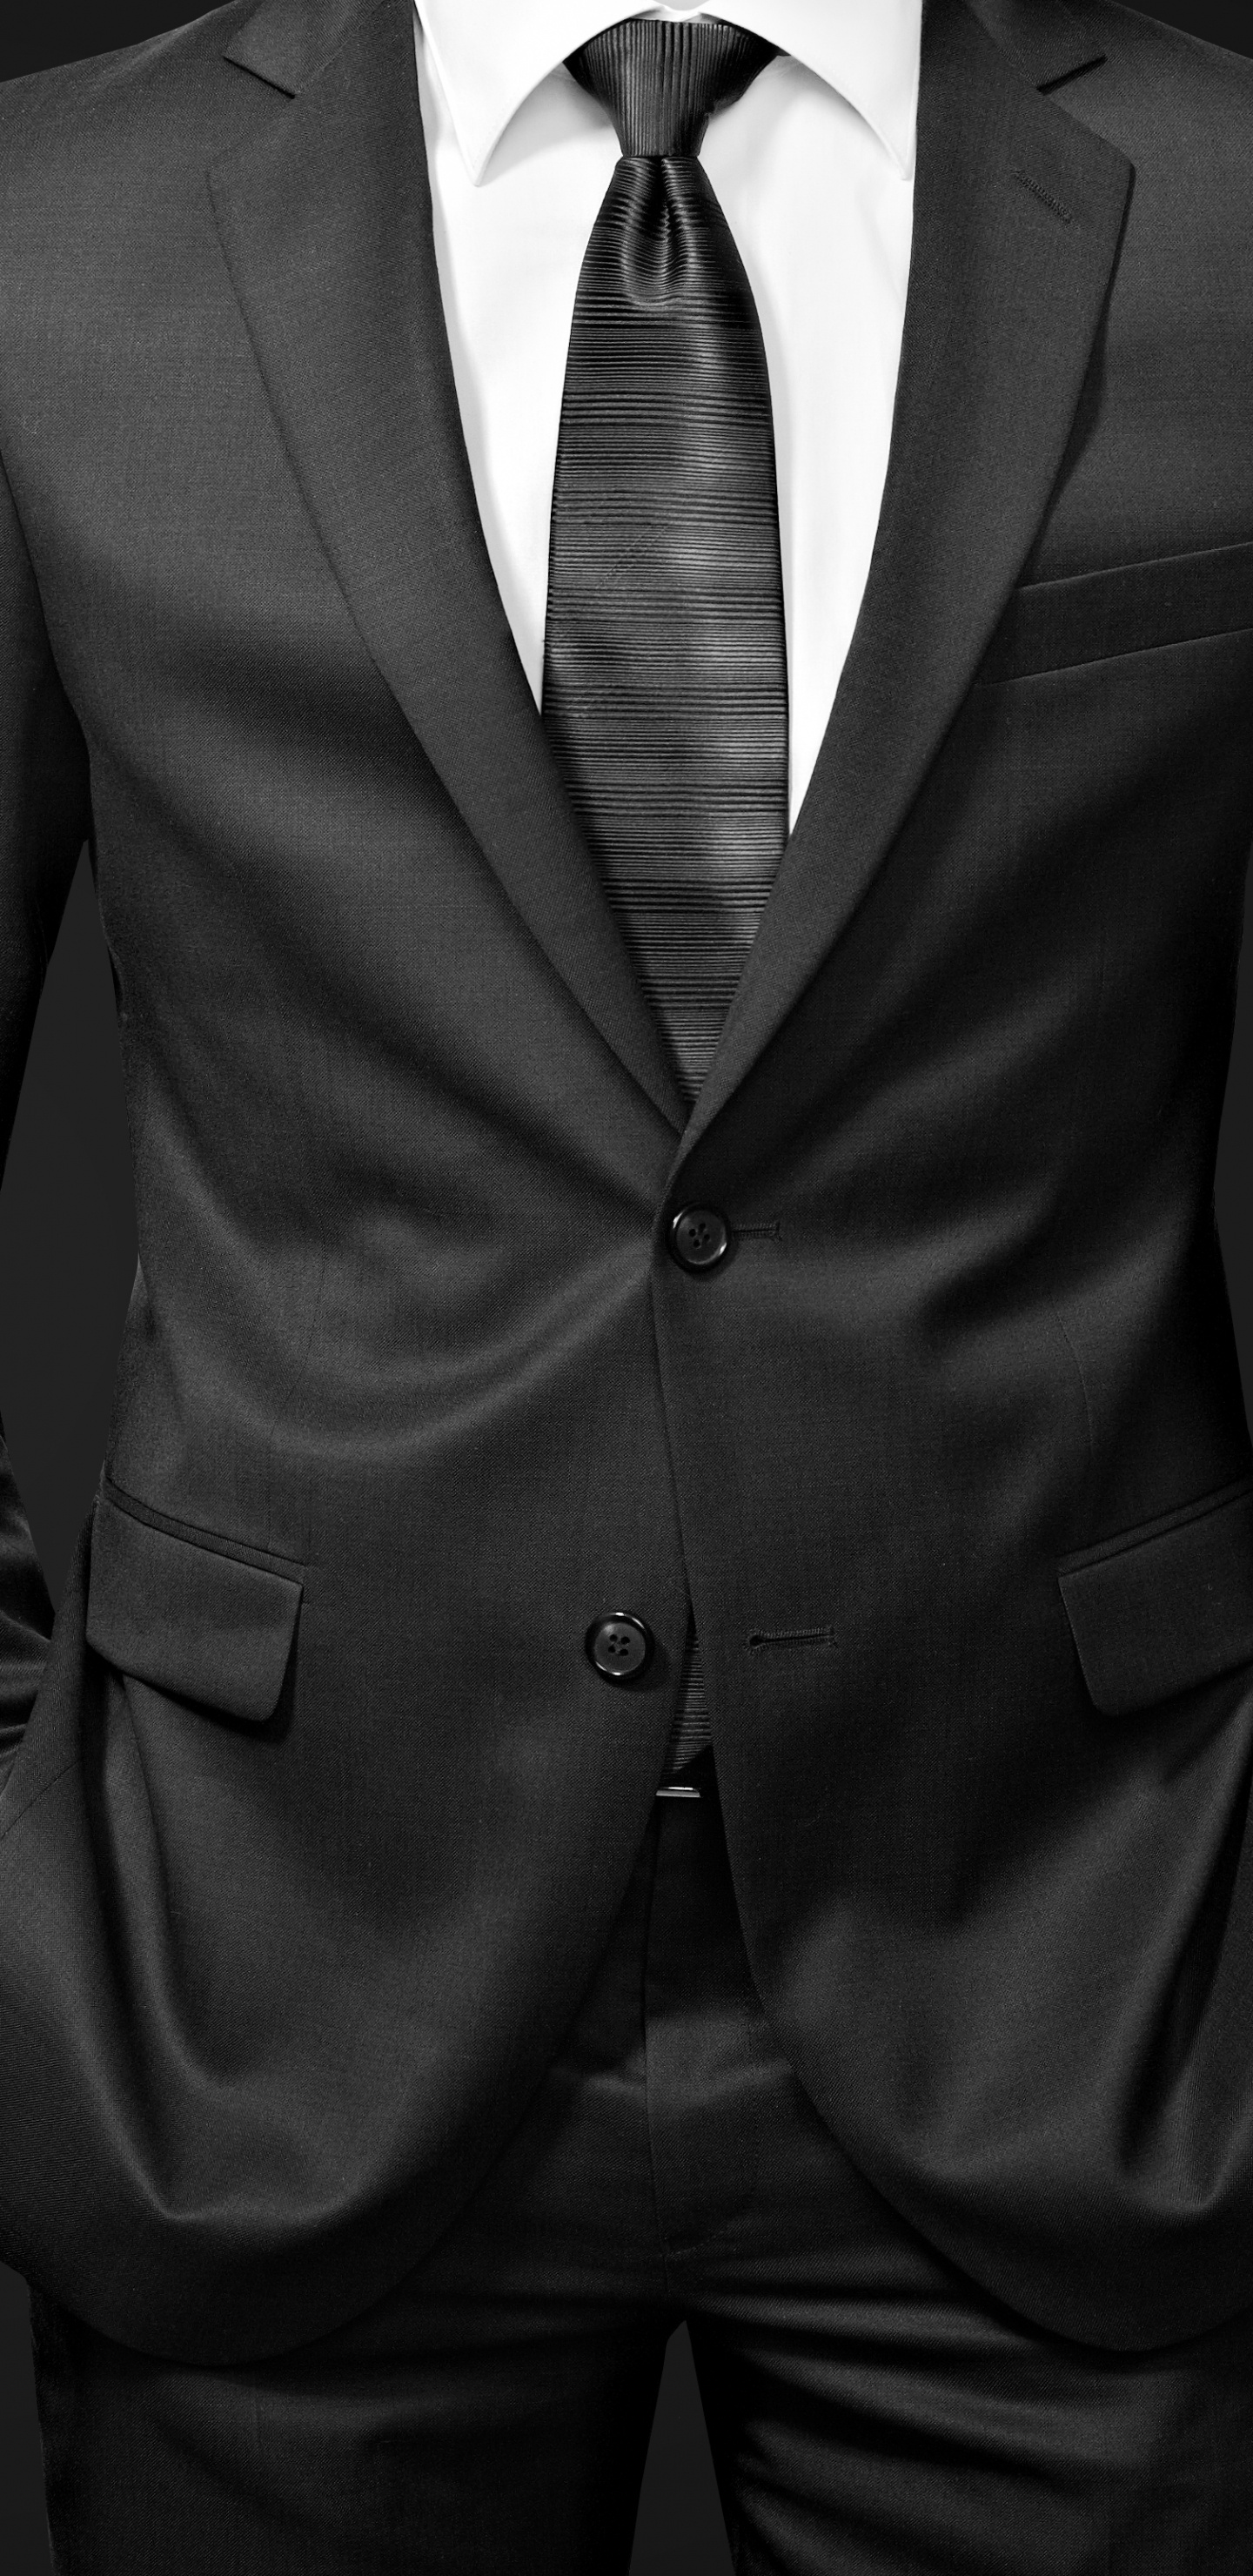 Man in Black Suit Jacket. Wallpaper in 1440x2960 Resolution